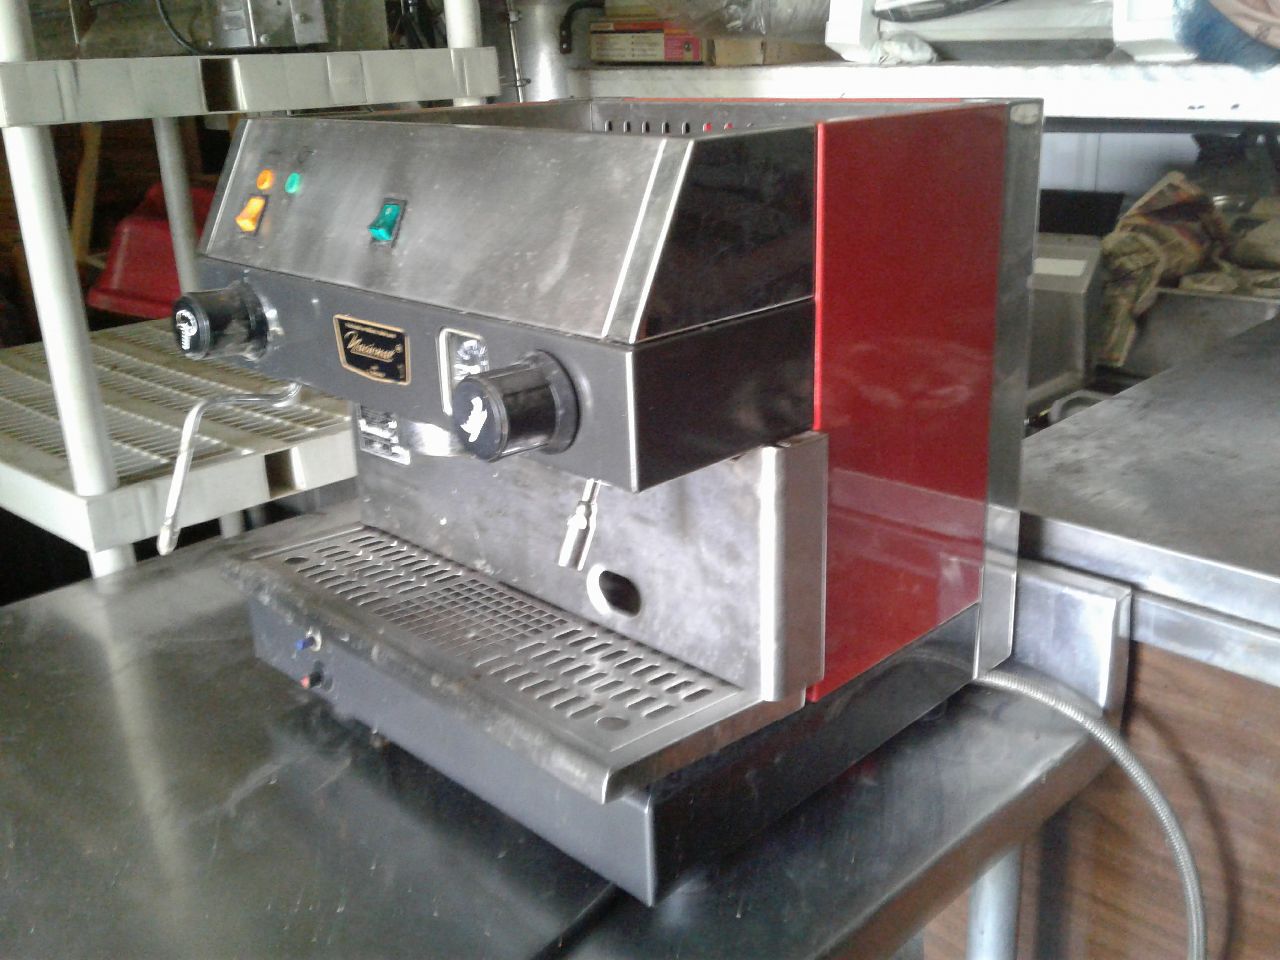 Italian coffe machine.